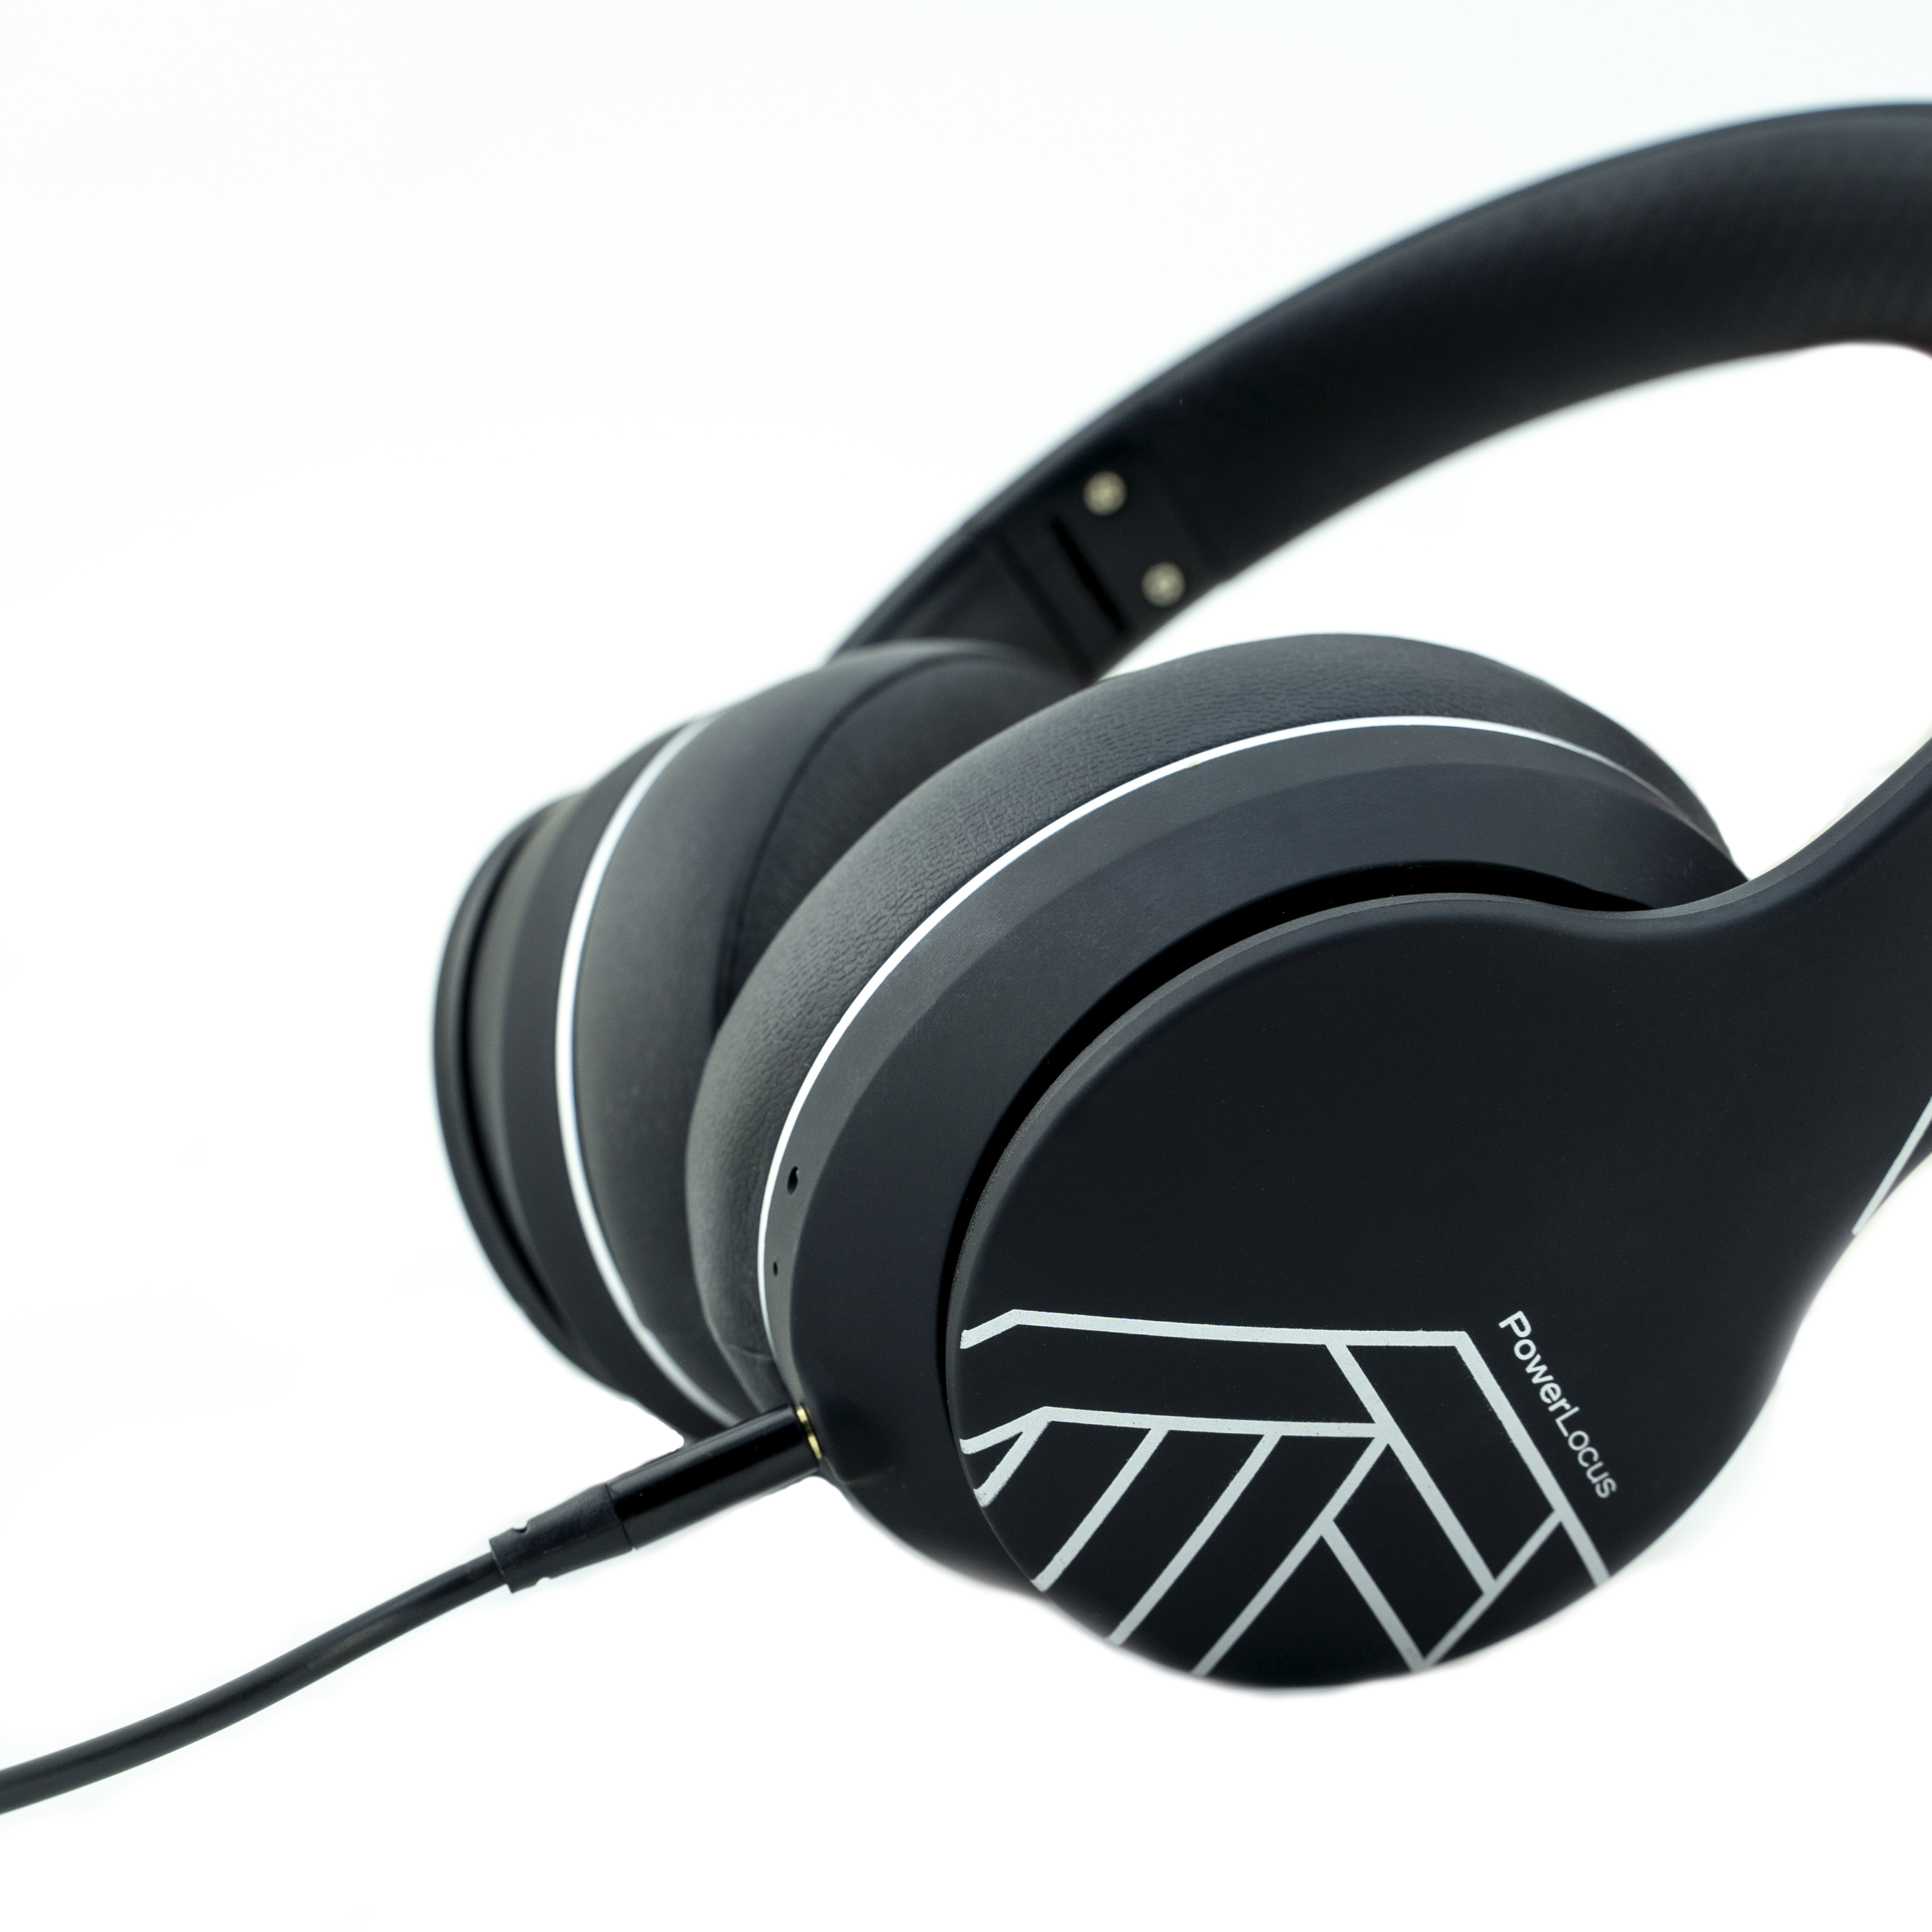 POWERLOCUS P6, Bluetooth Over-ear Kopfhörer Schwarz/Zilver